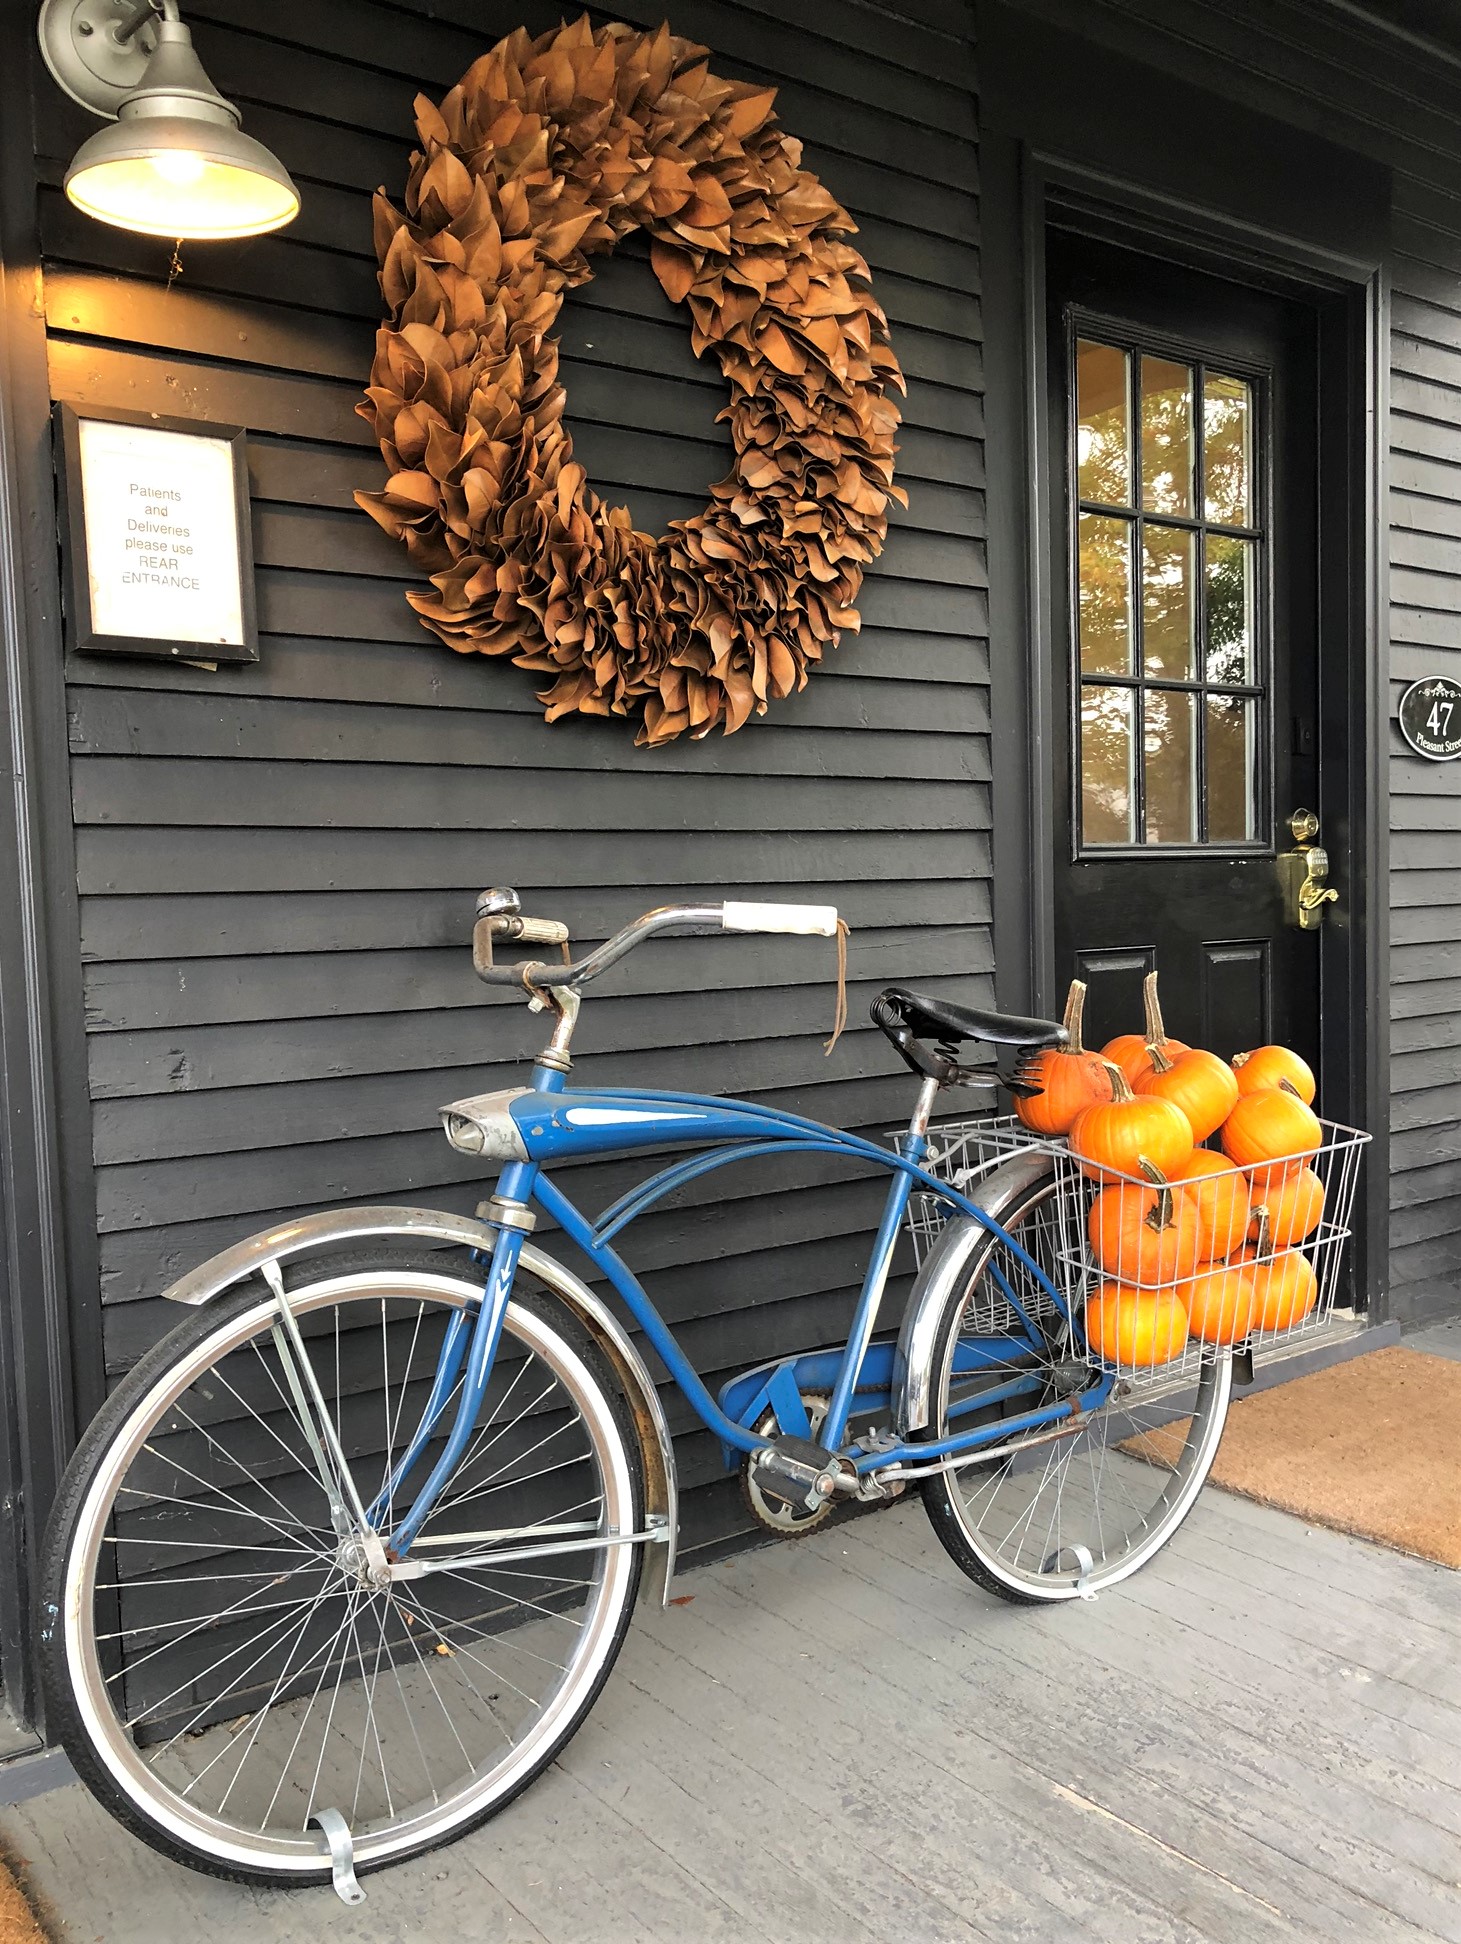 Vintage Bicycle with a bike basket filled with orange pumpkins